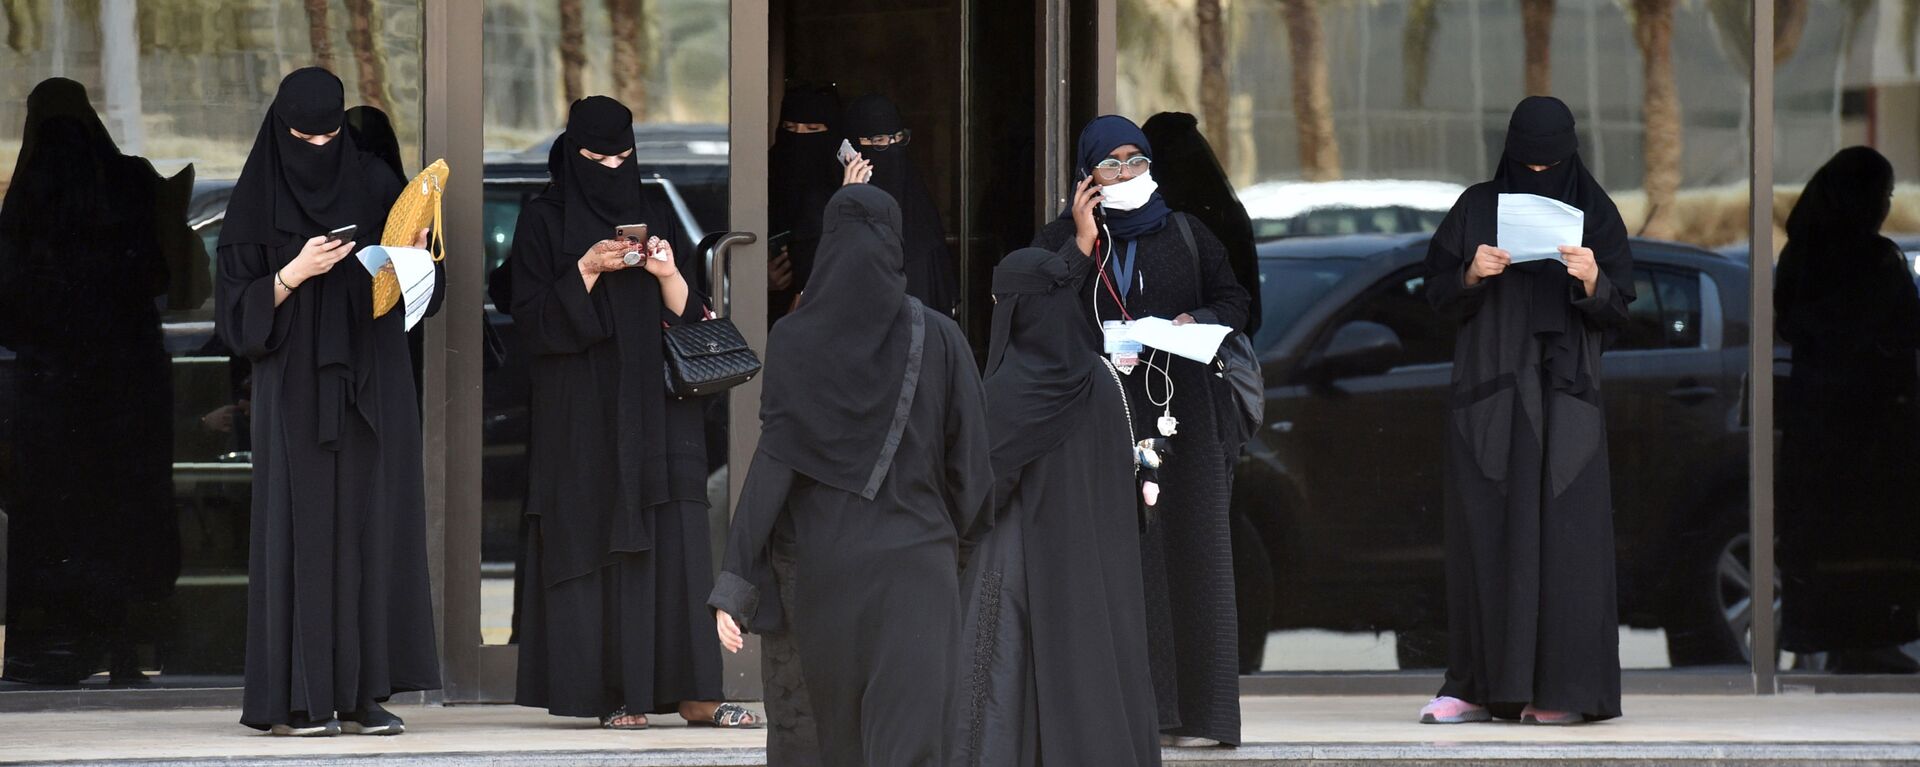 نساء سعوديات، 24 يونيو 2019 - سبوتنيك عربي, 1920, 17.02.2022